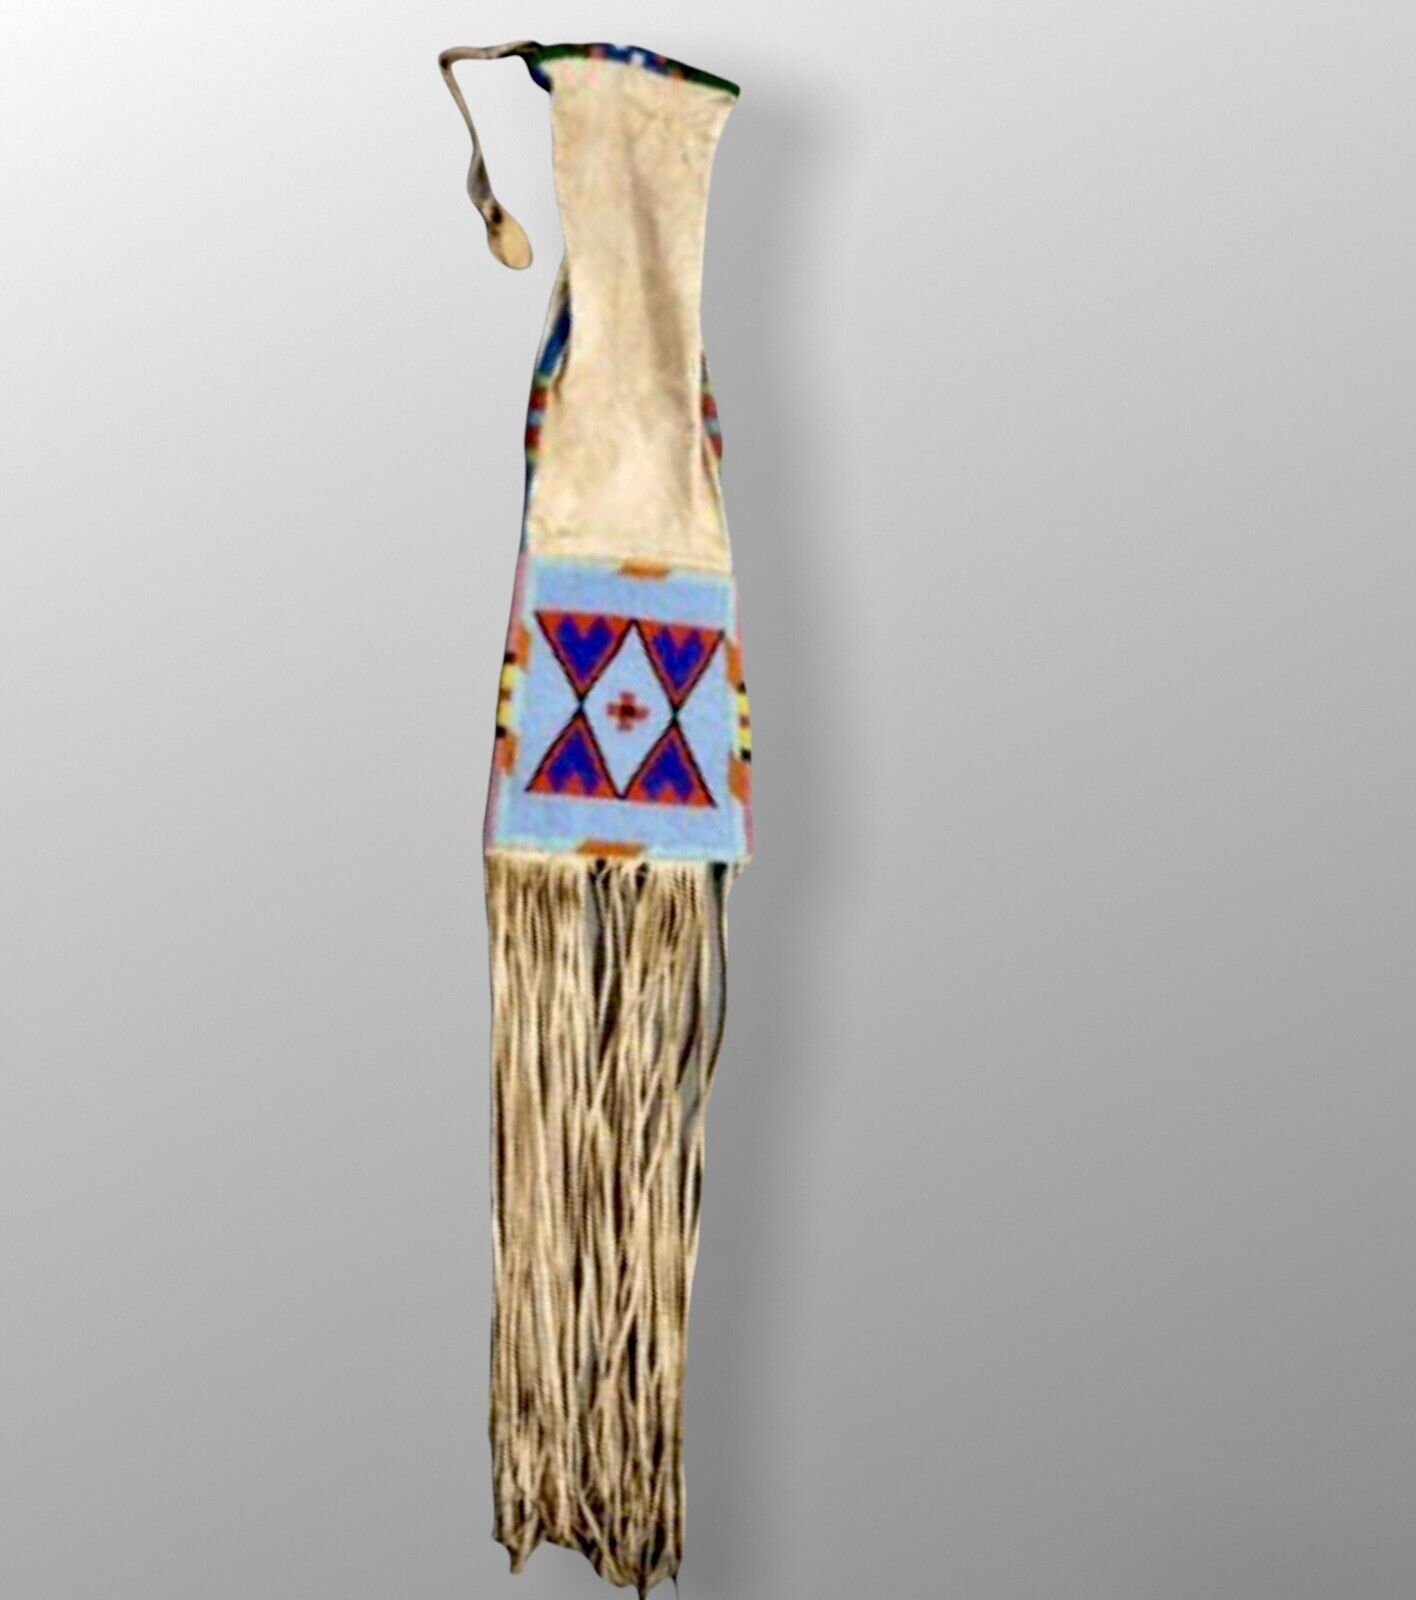 Old style Indian Beaded Native American Plains Pipe Tabaco Bag Elk Hide Bag B903